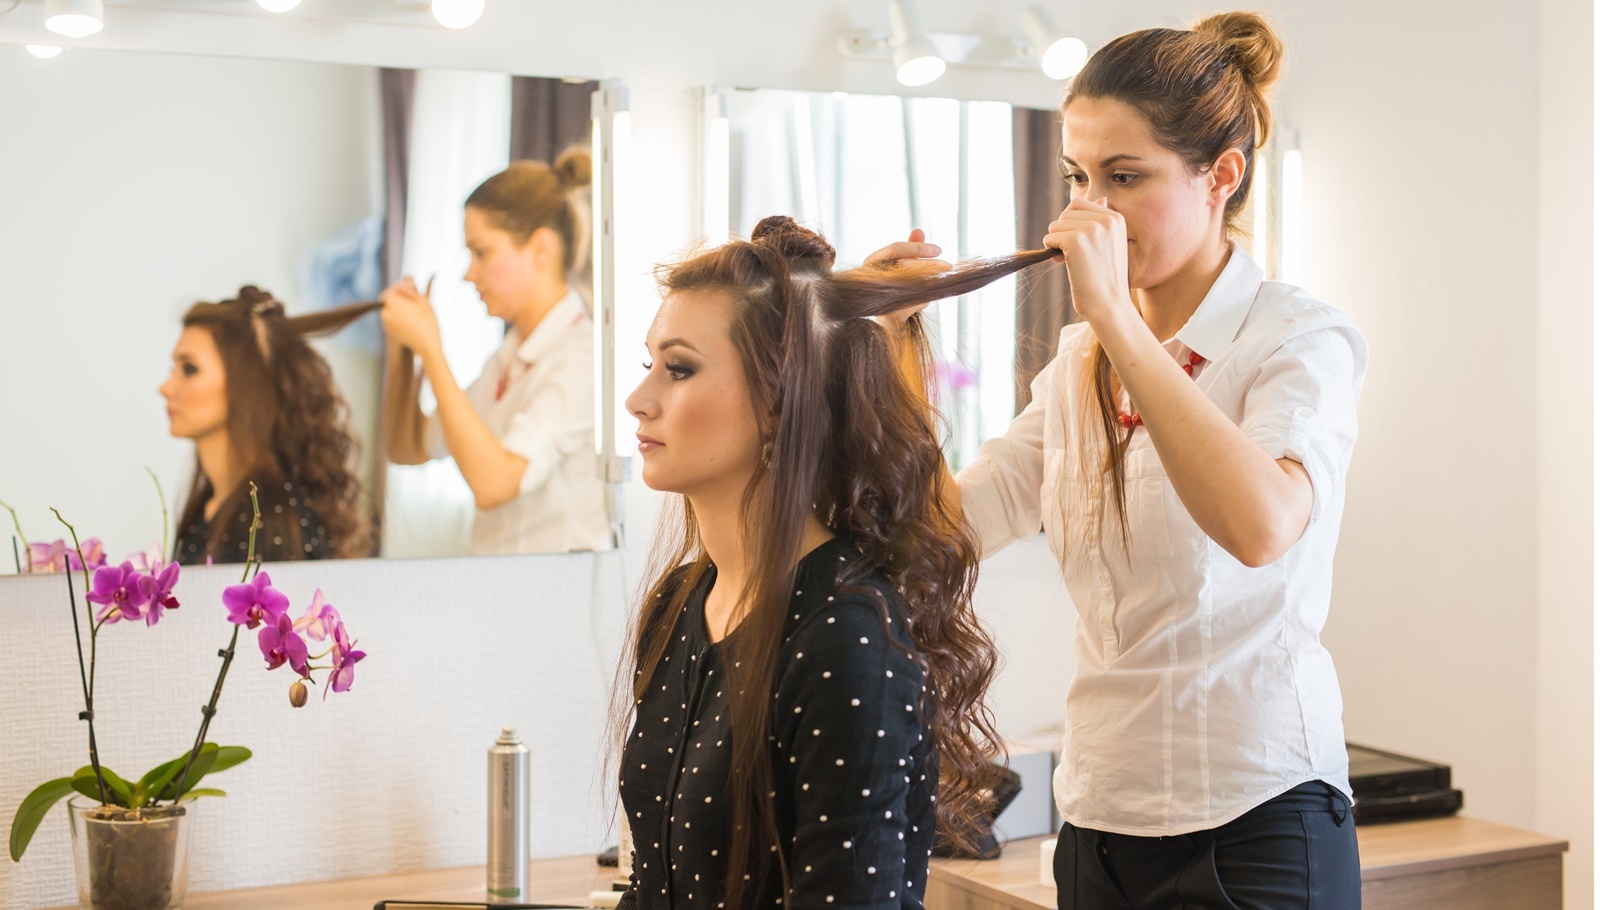 working-day-inside-the-beauty-salon-hairdresser-m-2021-08-28-07-46-59-utc